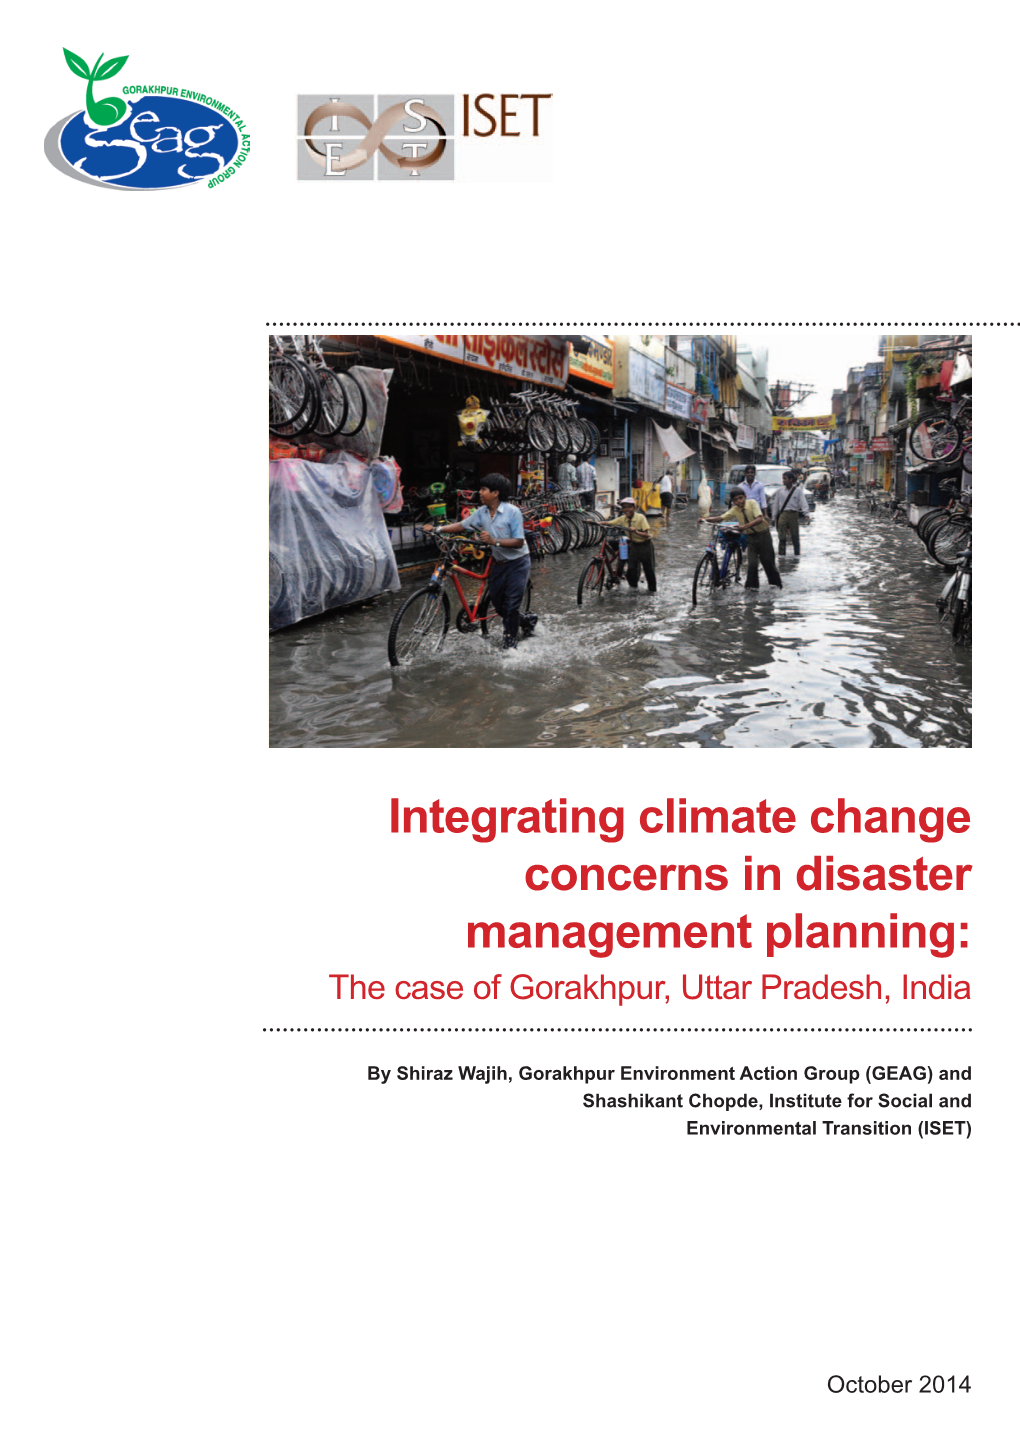 Integrating Climate Change Concerns in Disaster Management Planning: the Case of Gorakhpur, Uttar Pradesh, India